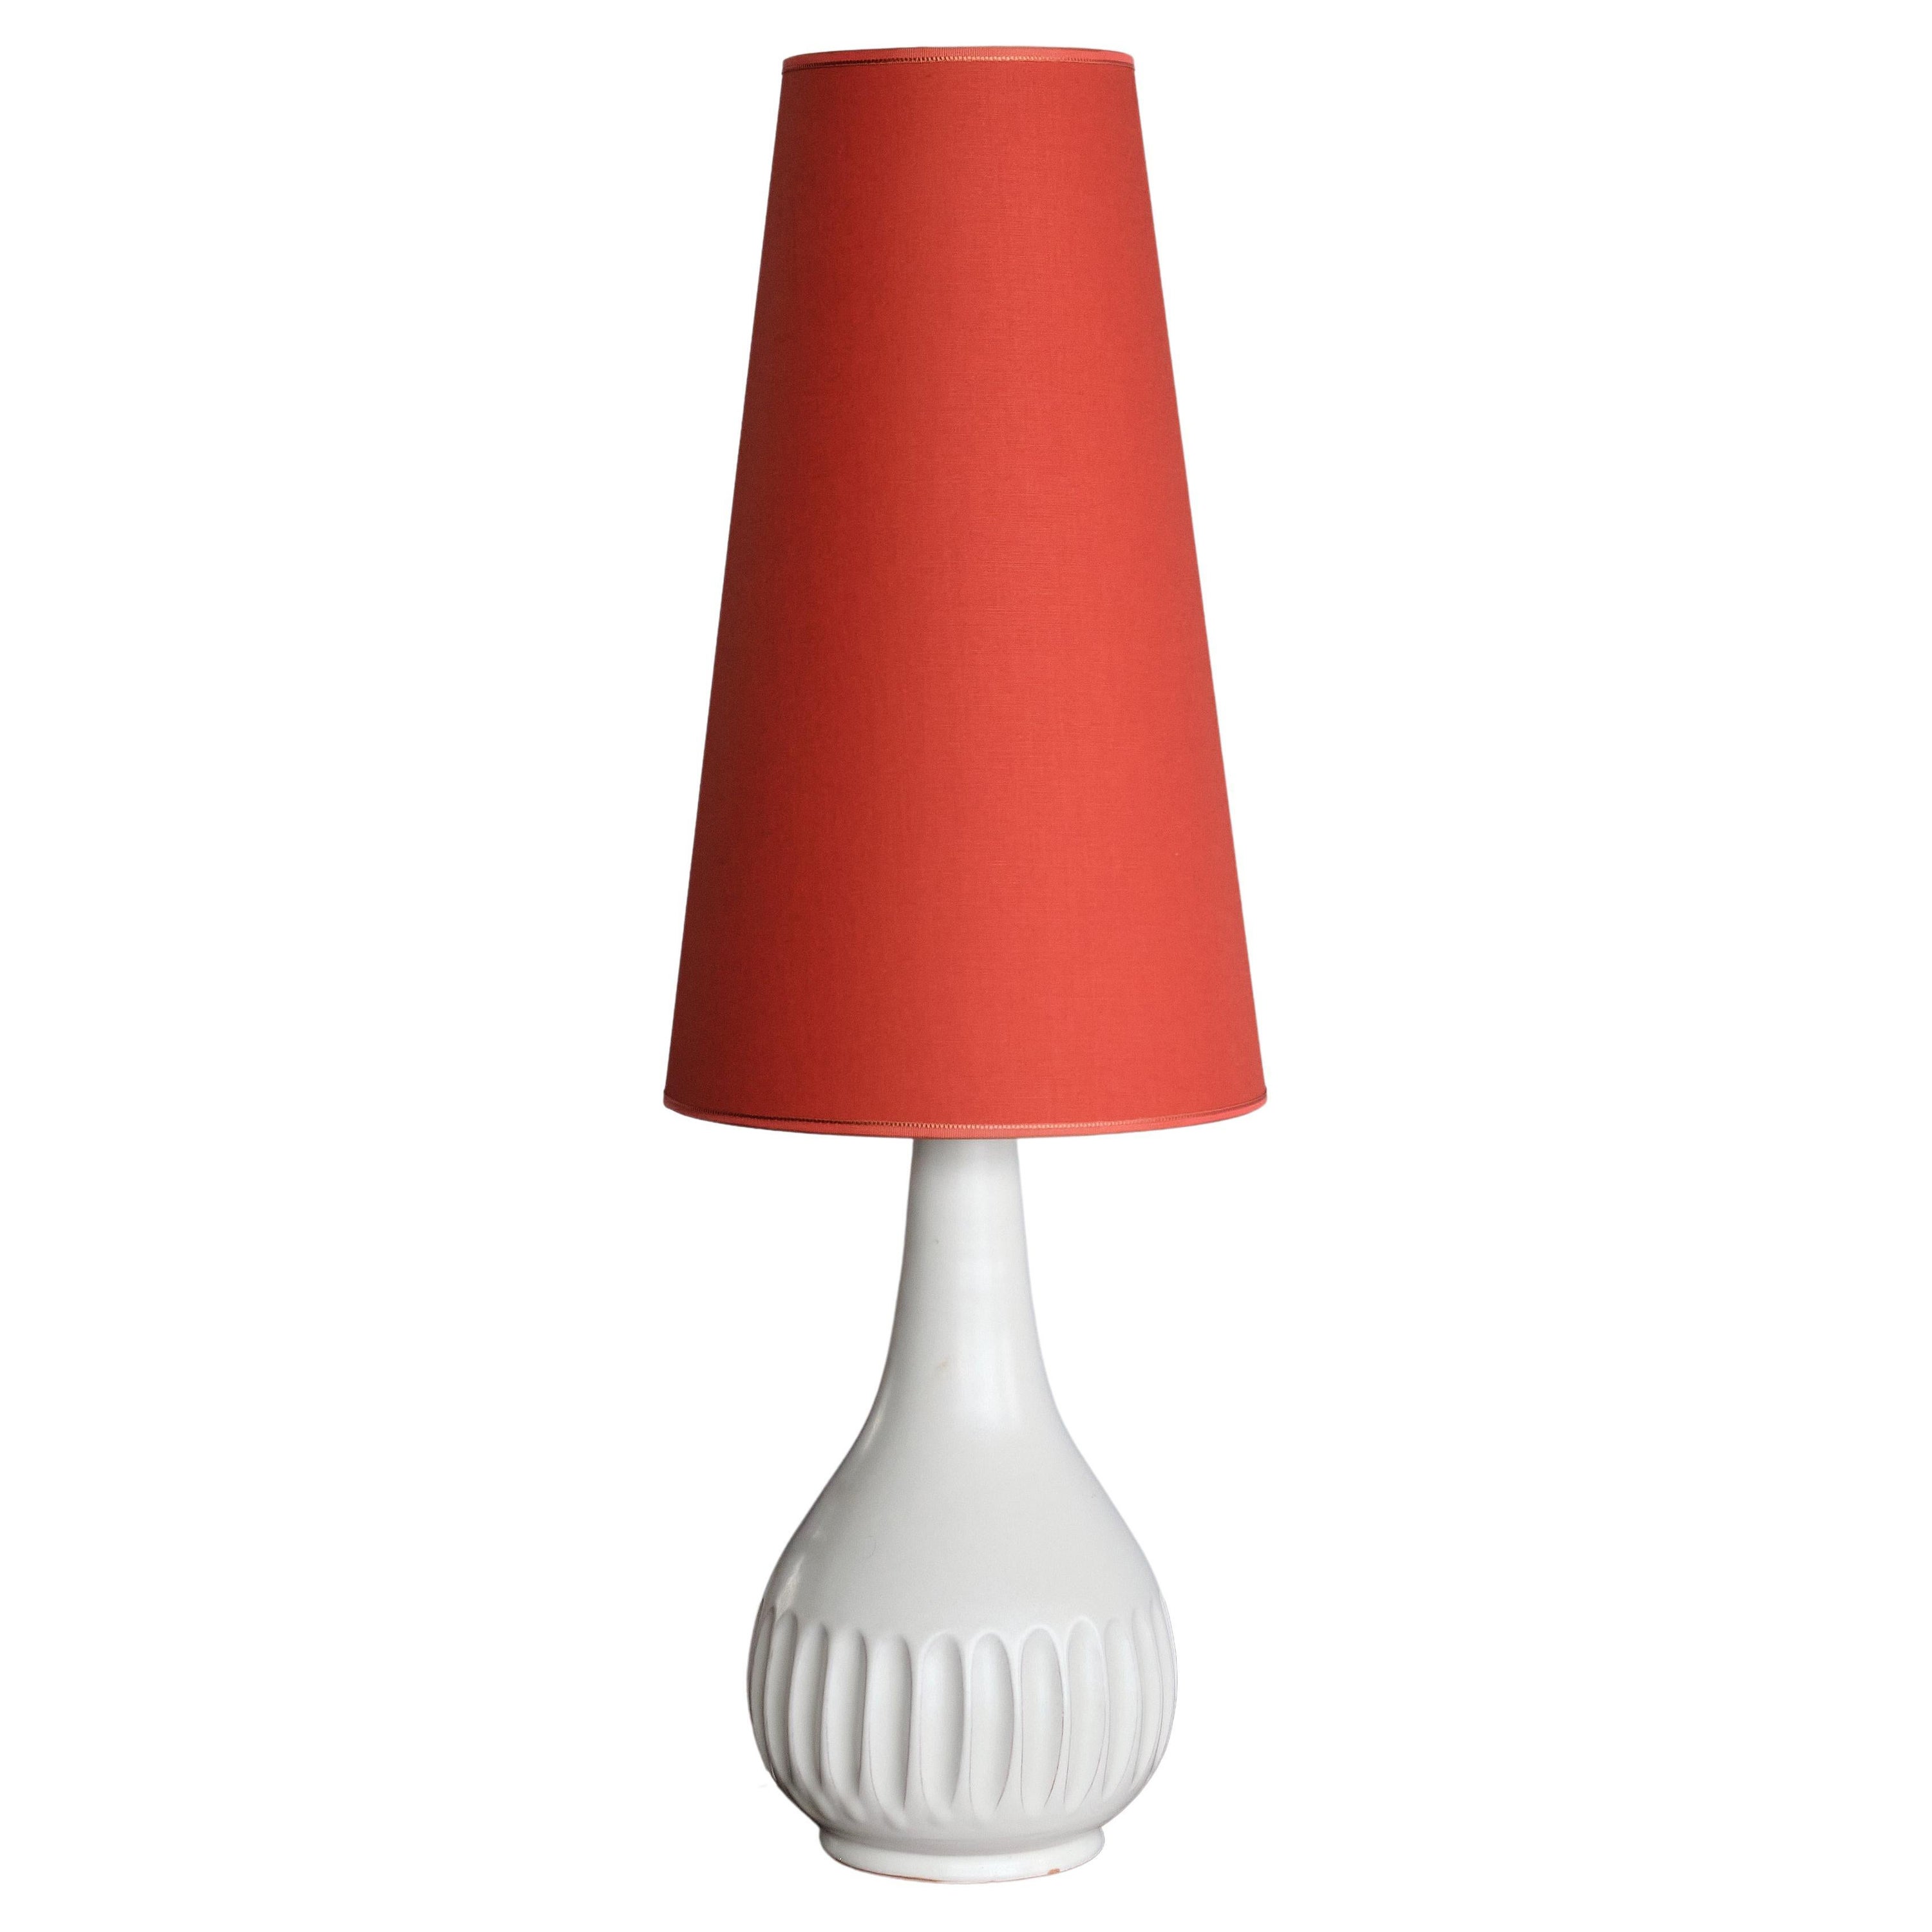 Anna-Lisa Thomson Ceramic Table Lamp, Upsala-Ekeby, Swedish Modern, 1940s For Sale